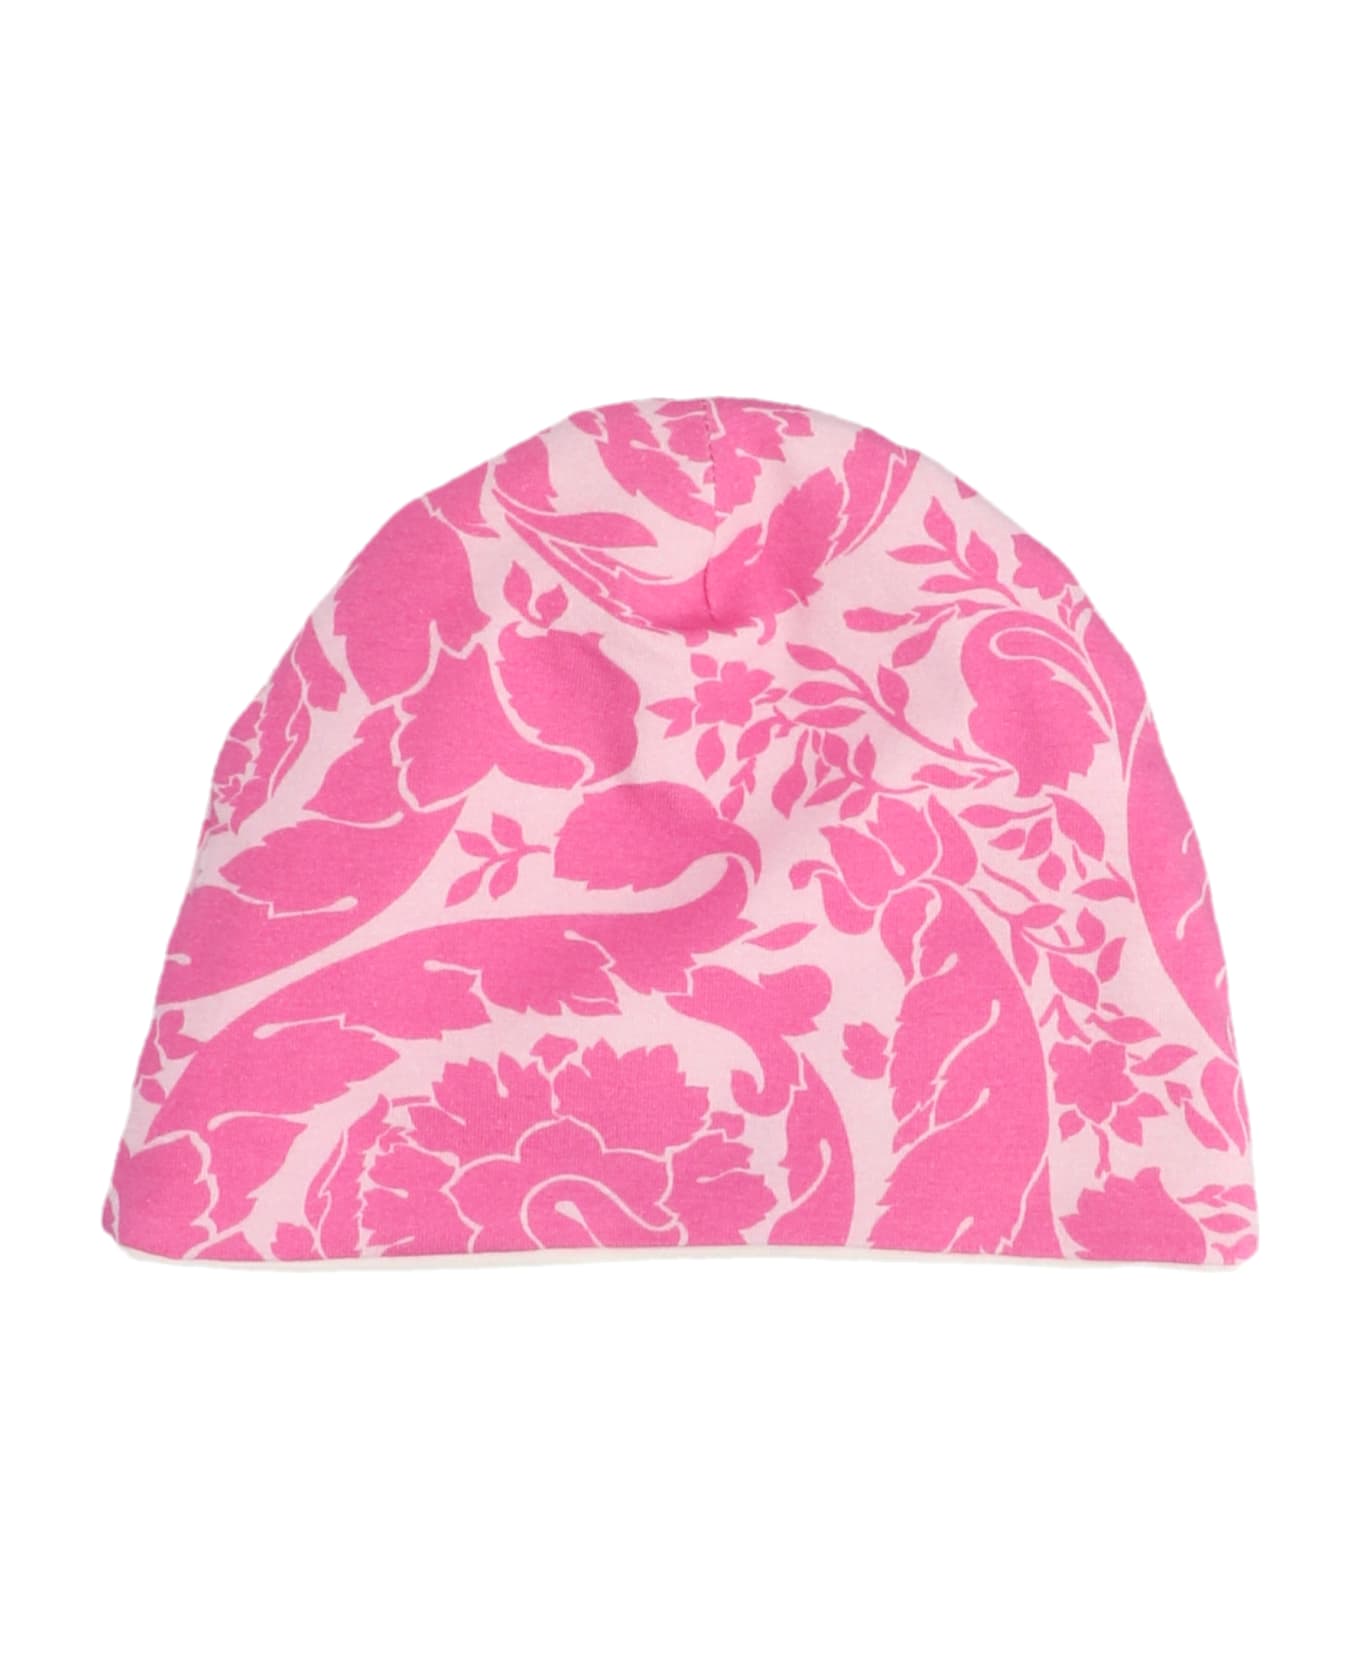 Versace 'barocco' Sleepsuit + Hat Baby Set - Pink